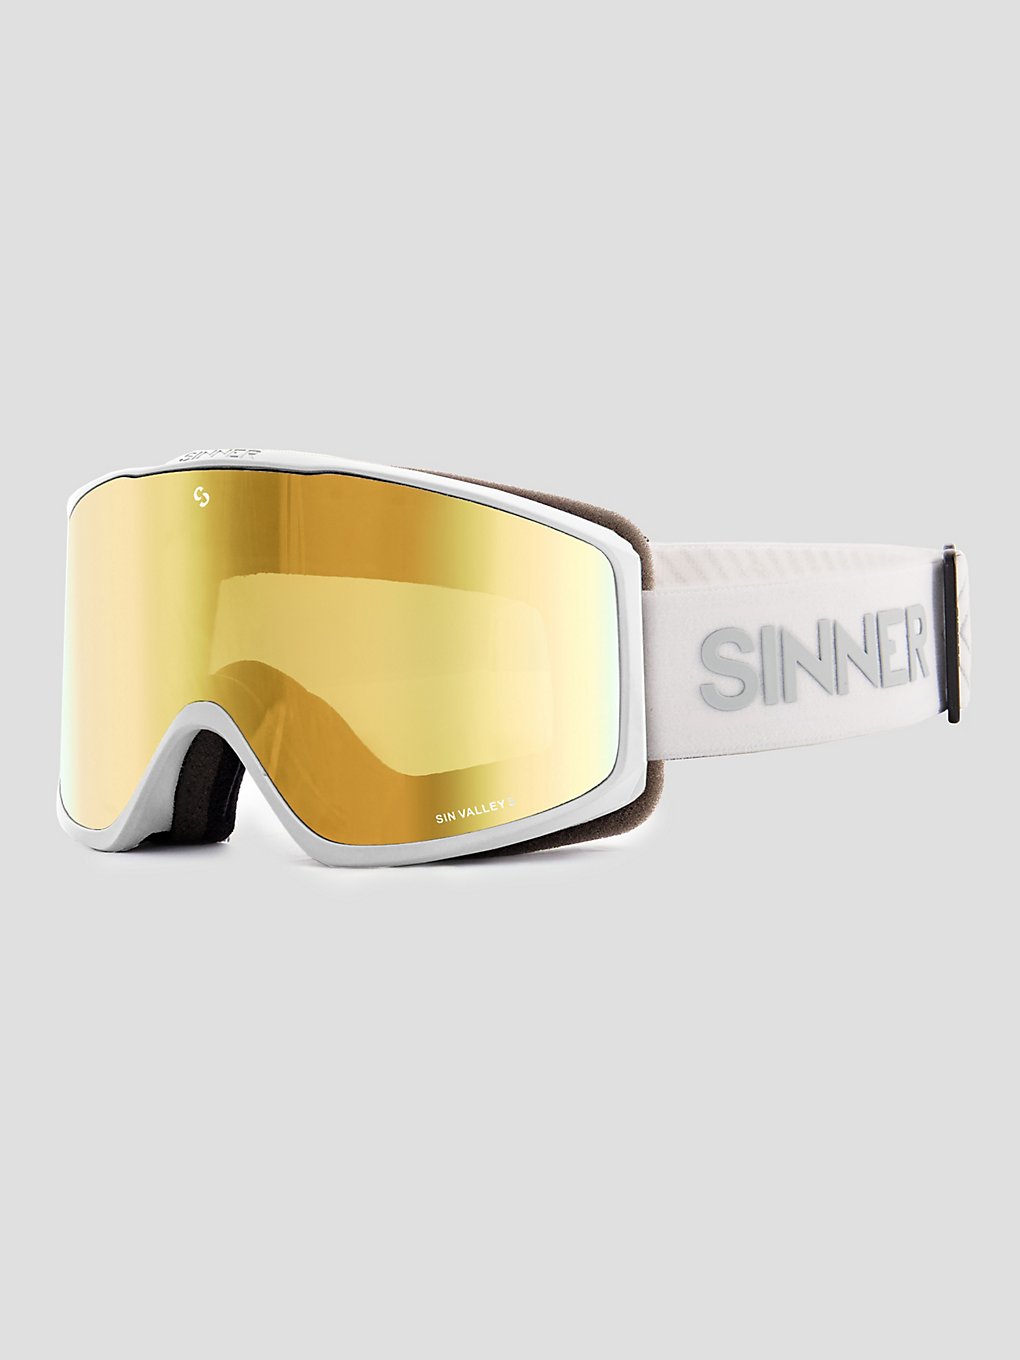 Sinner Sin Valley S Matte White (+Bonus Lens) Goggle double gold oil + double kaufen